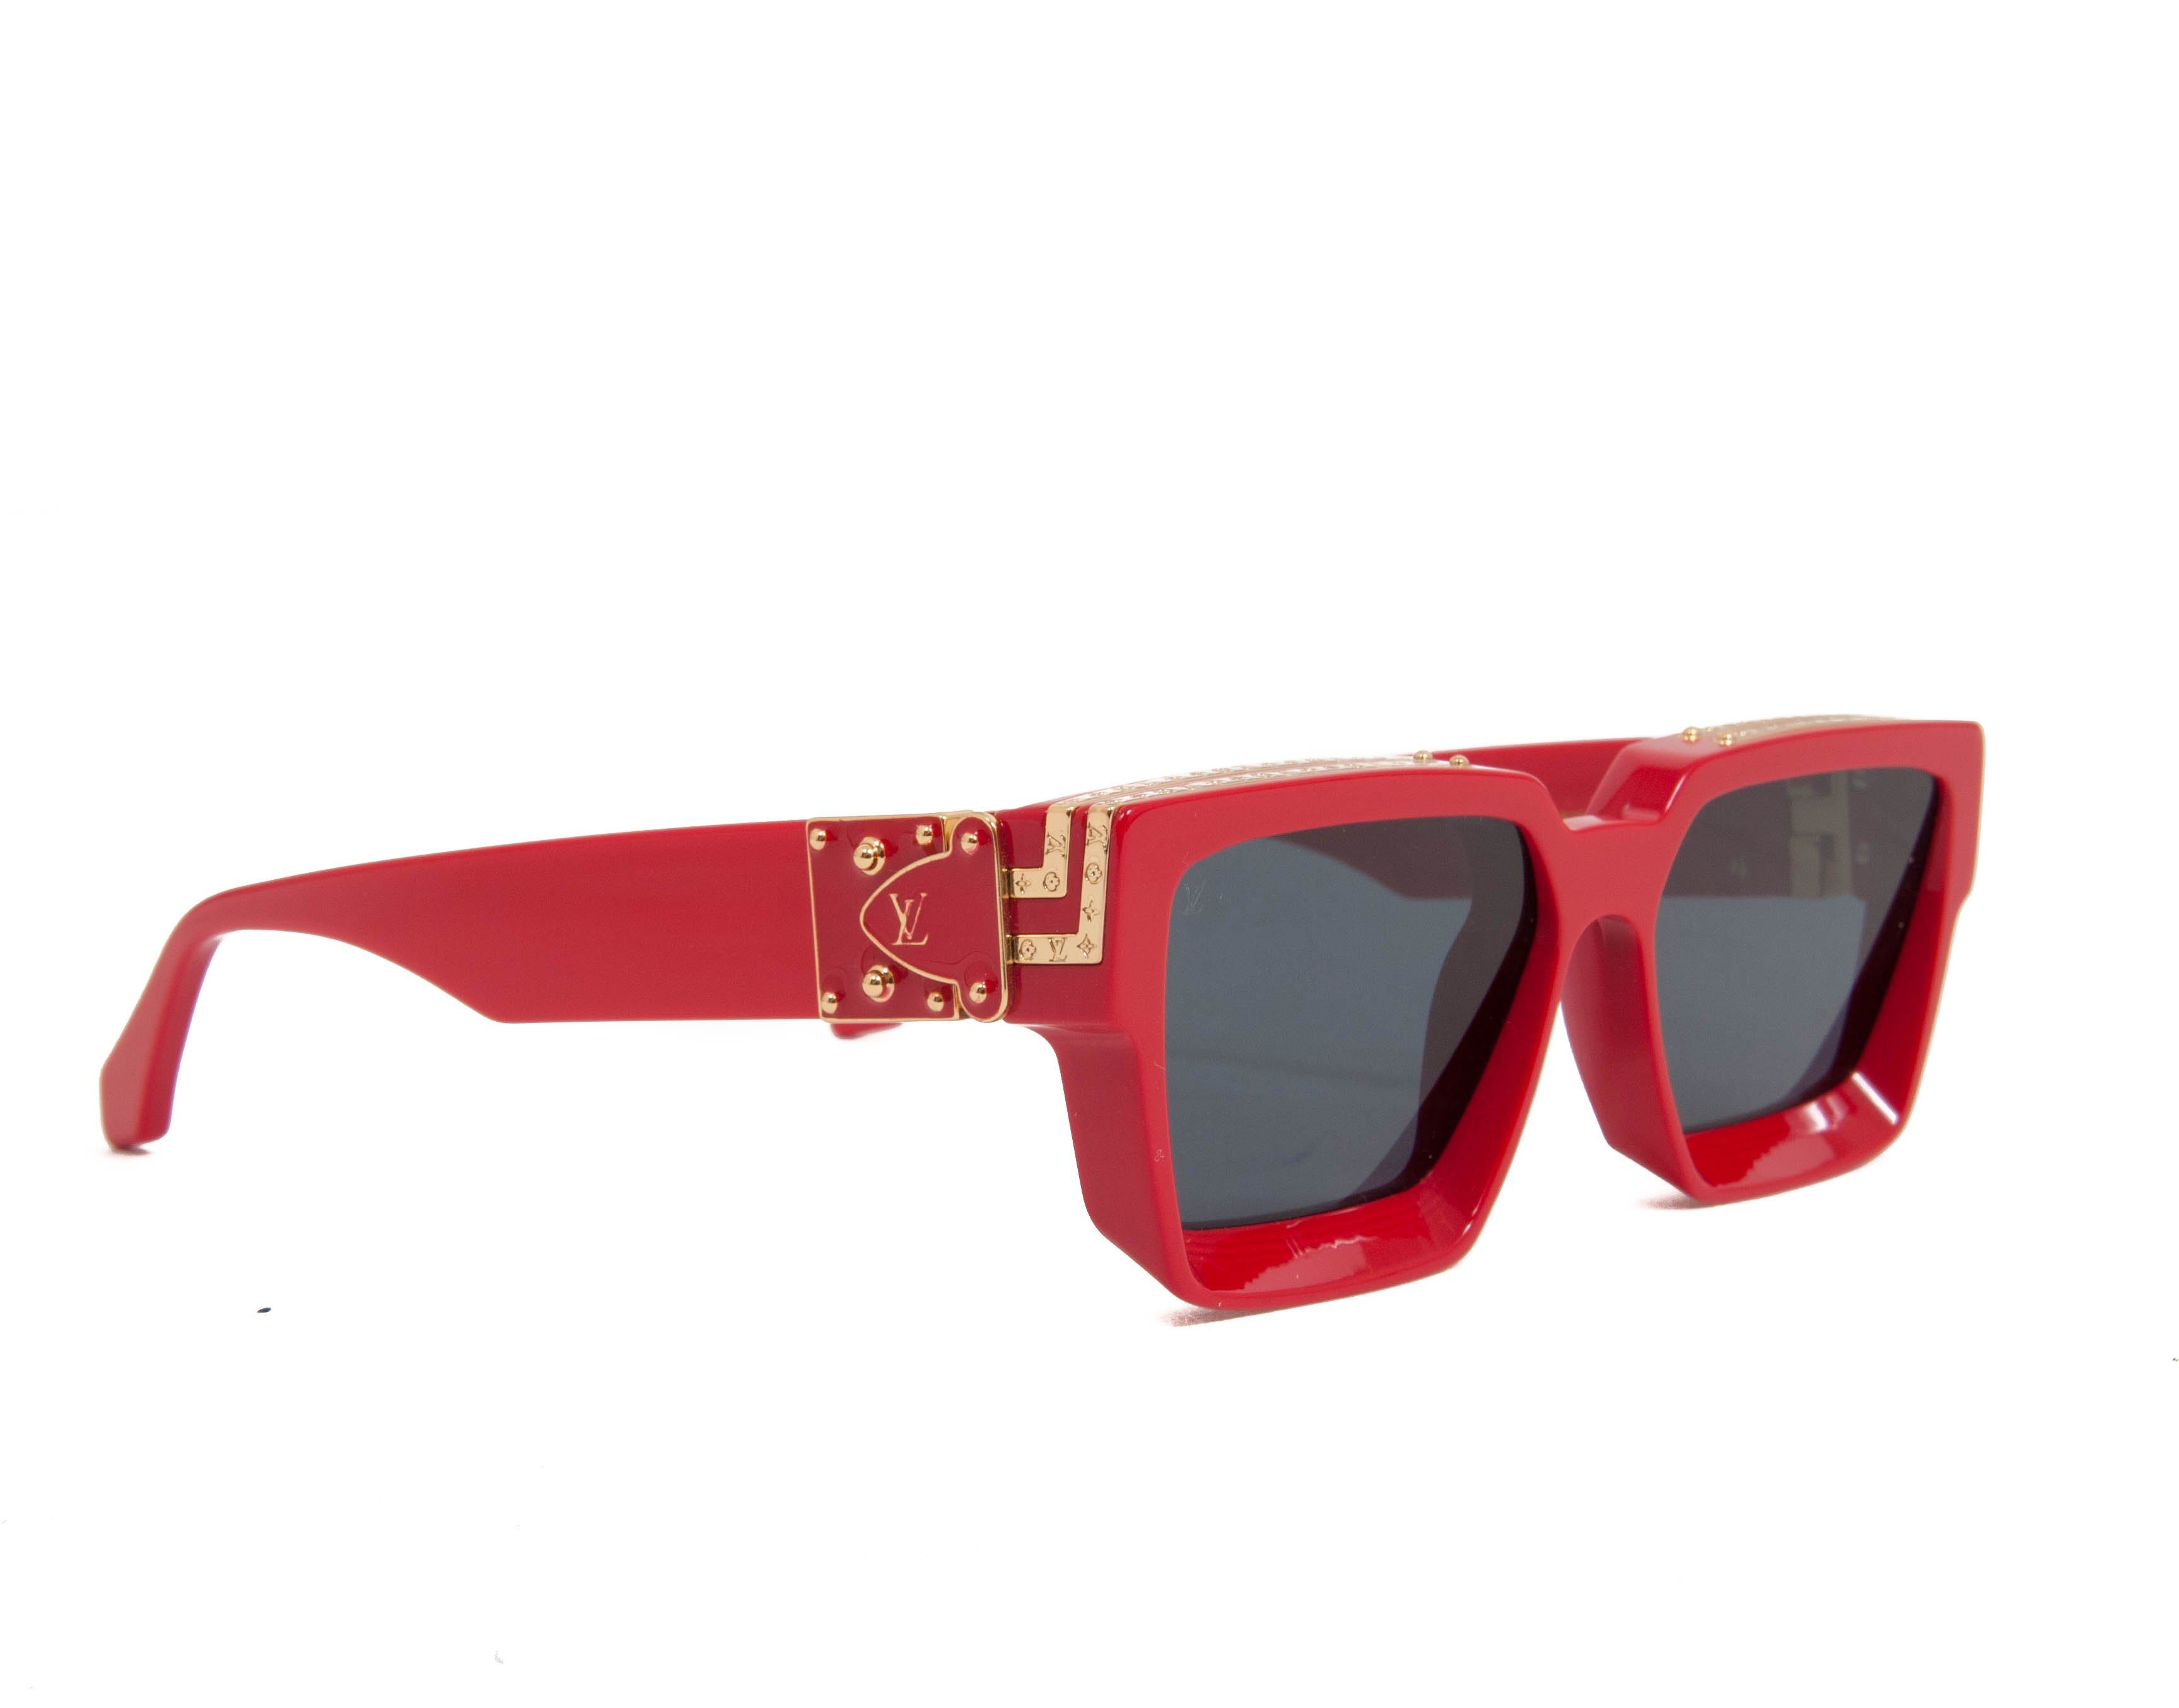 Red Sunglasses - Millionaire SunGlasses - My Millionaire Sunglasses